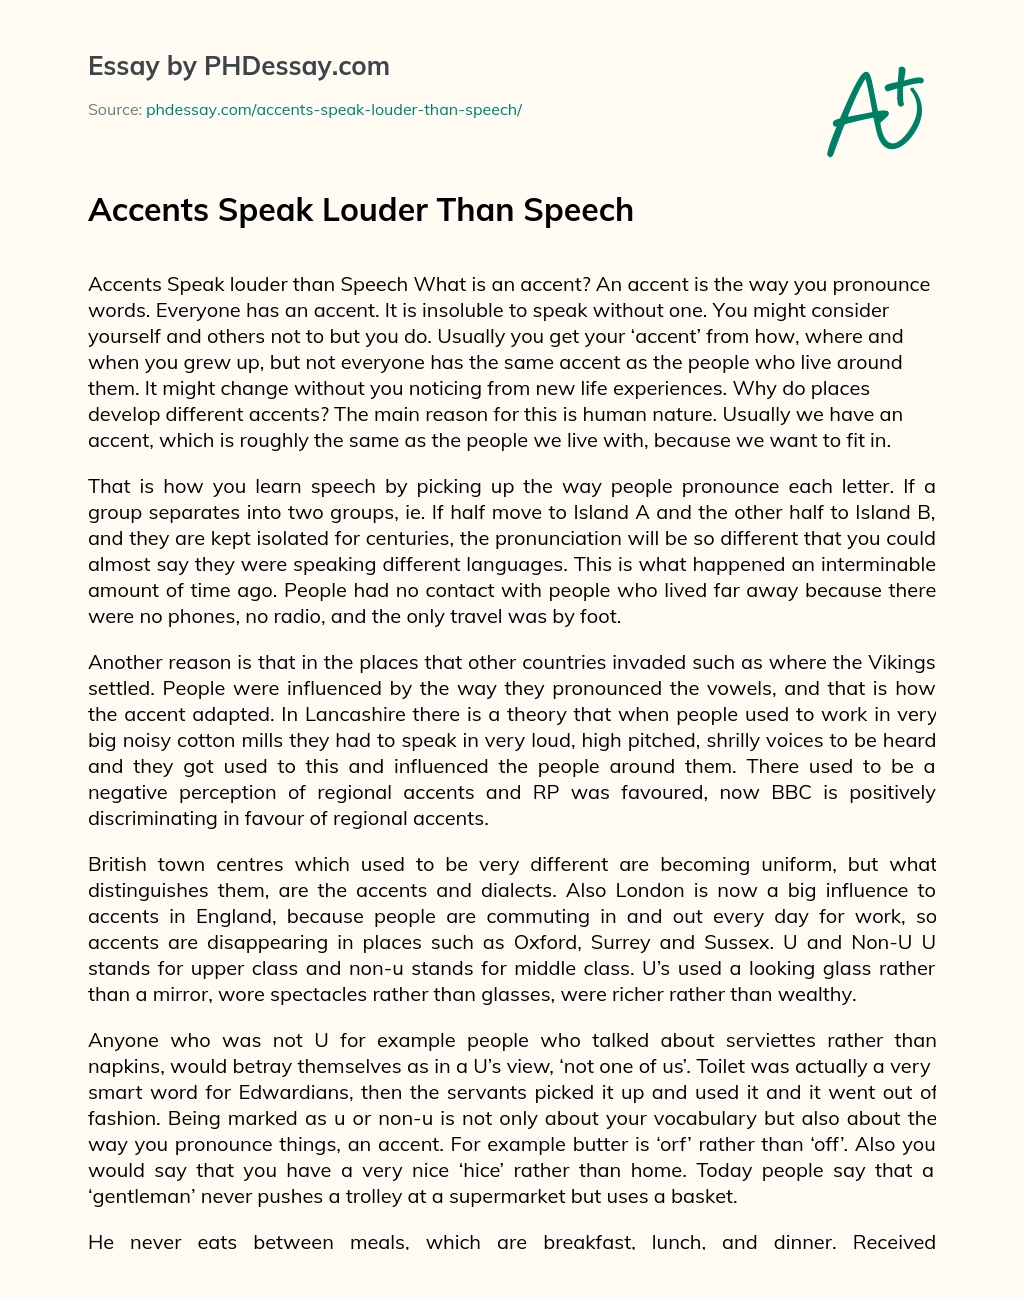 Accents Speak Louder Than Speech essay